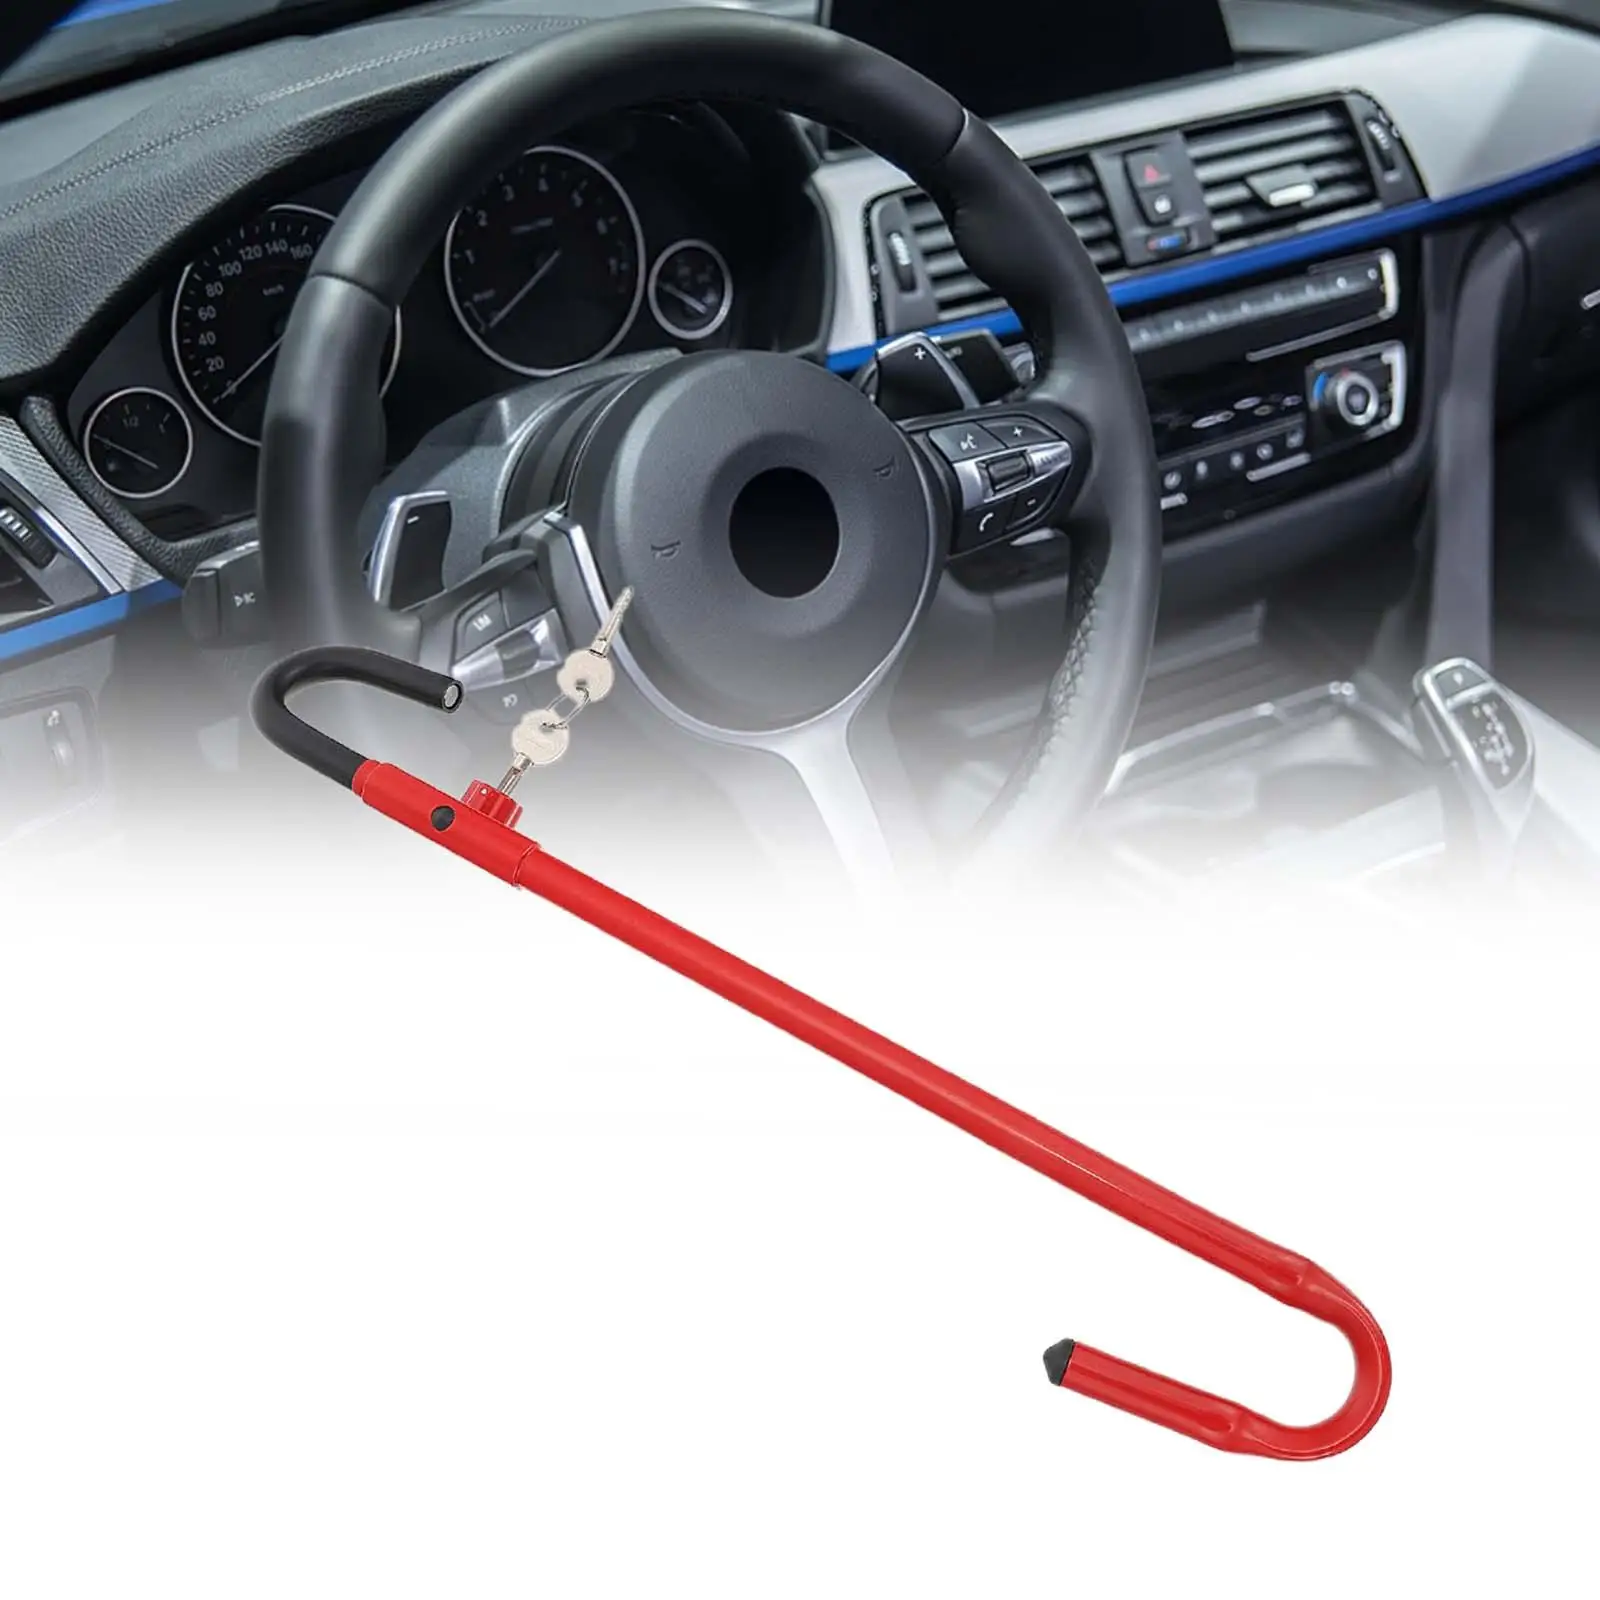 Car Steering Wheel Brake Lock Security Brake Pedal Lock for Automobile